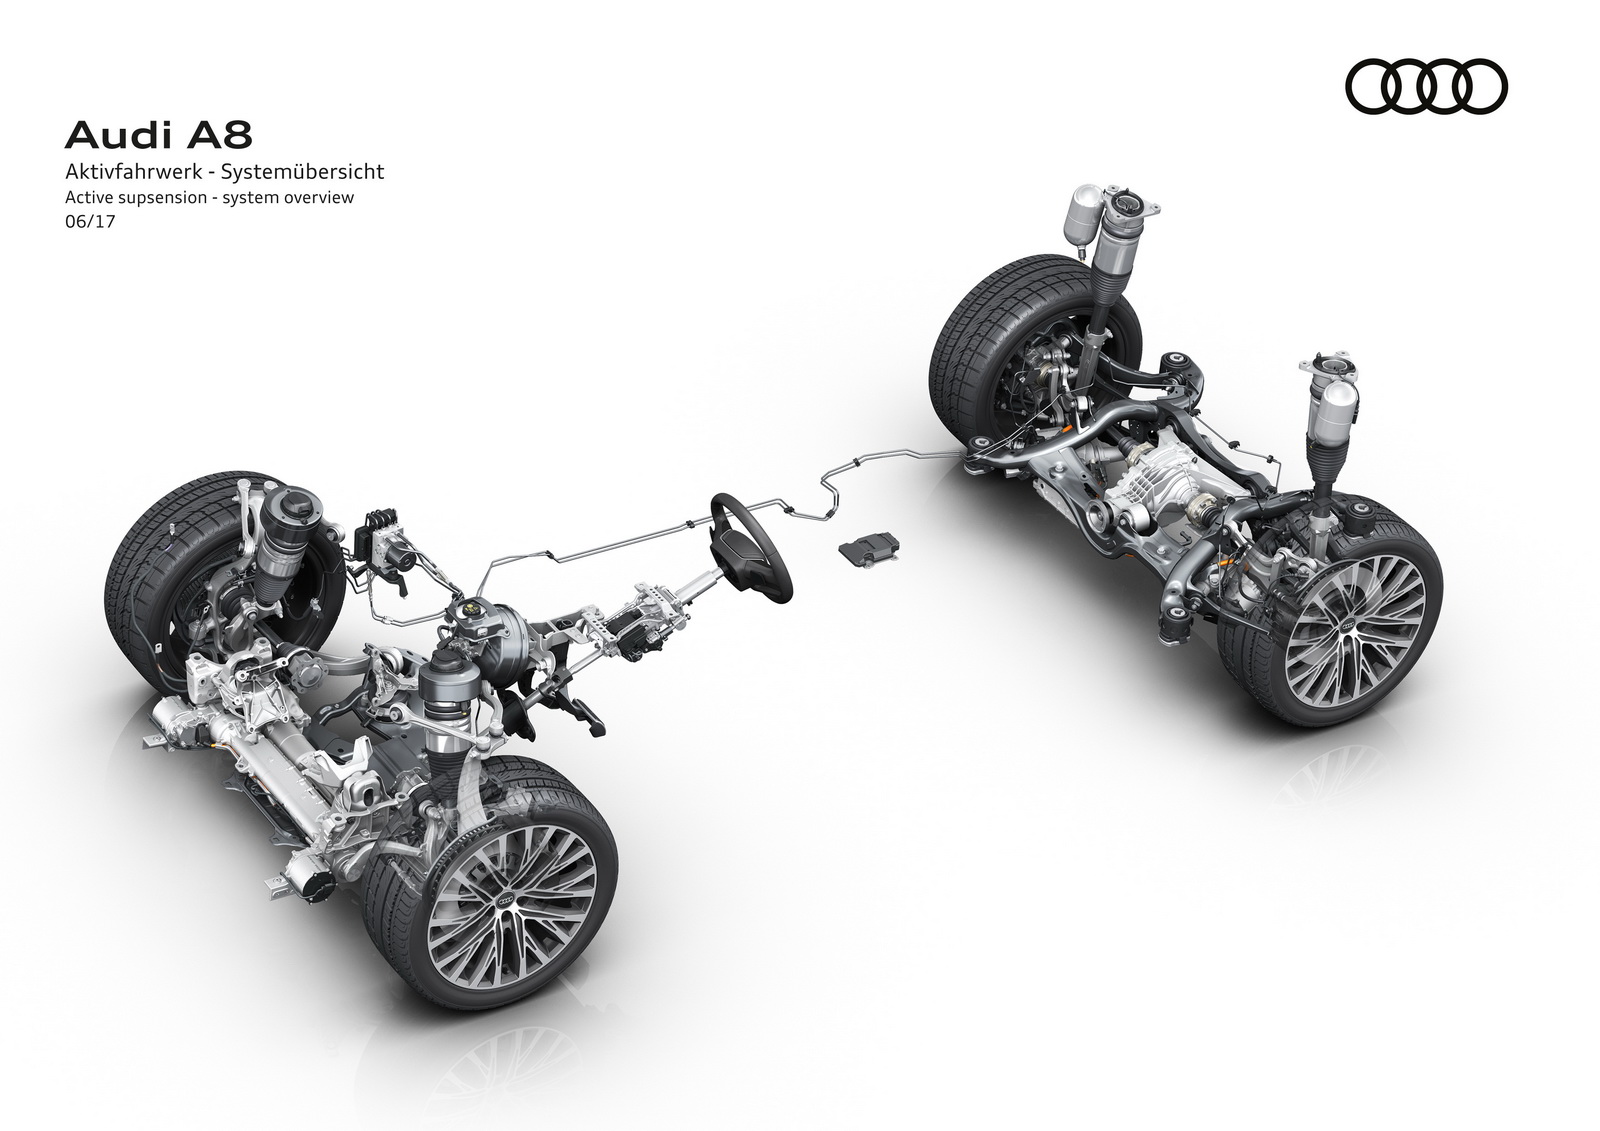 Audi, Active suspension – system overview: Sebuah Active Suspension dan Pilot dikala Macet? Nantikan di Audi A8!